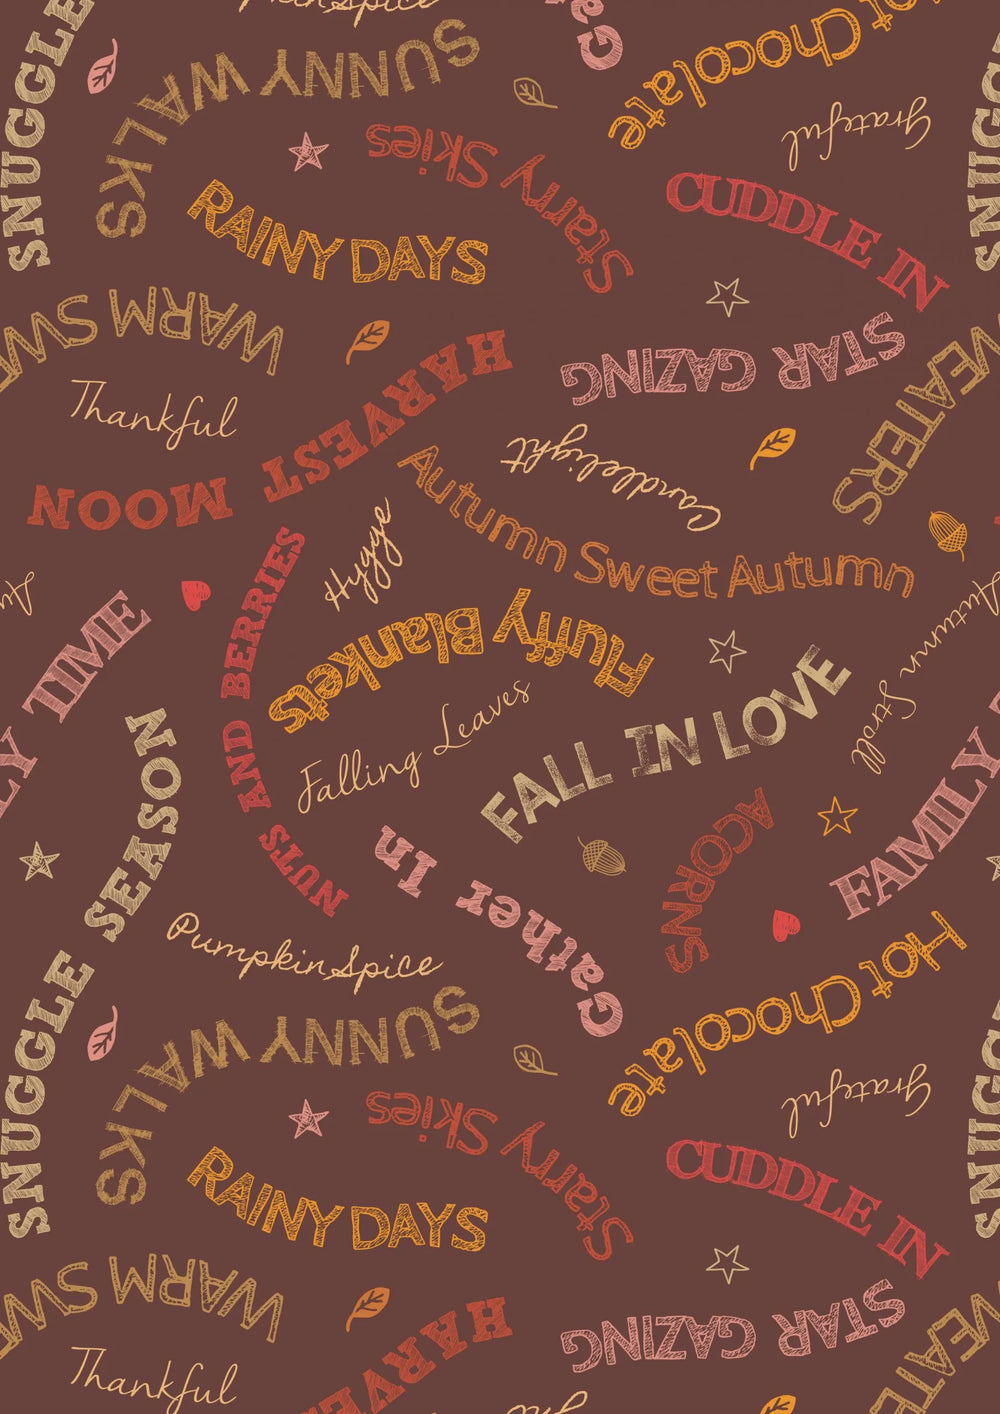 Snuggle Season - Cozy Words on Chocolate Brown